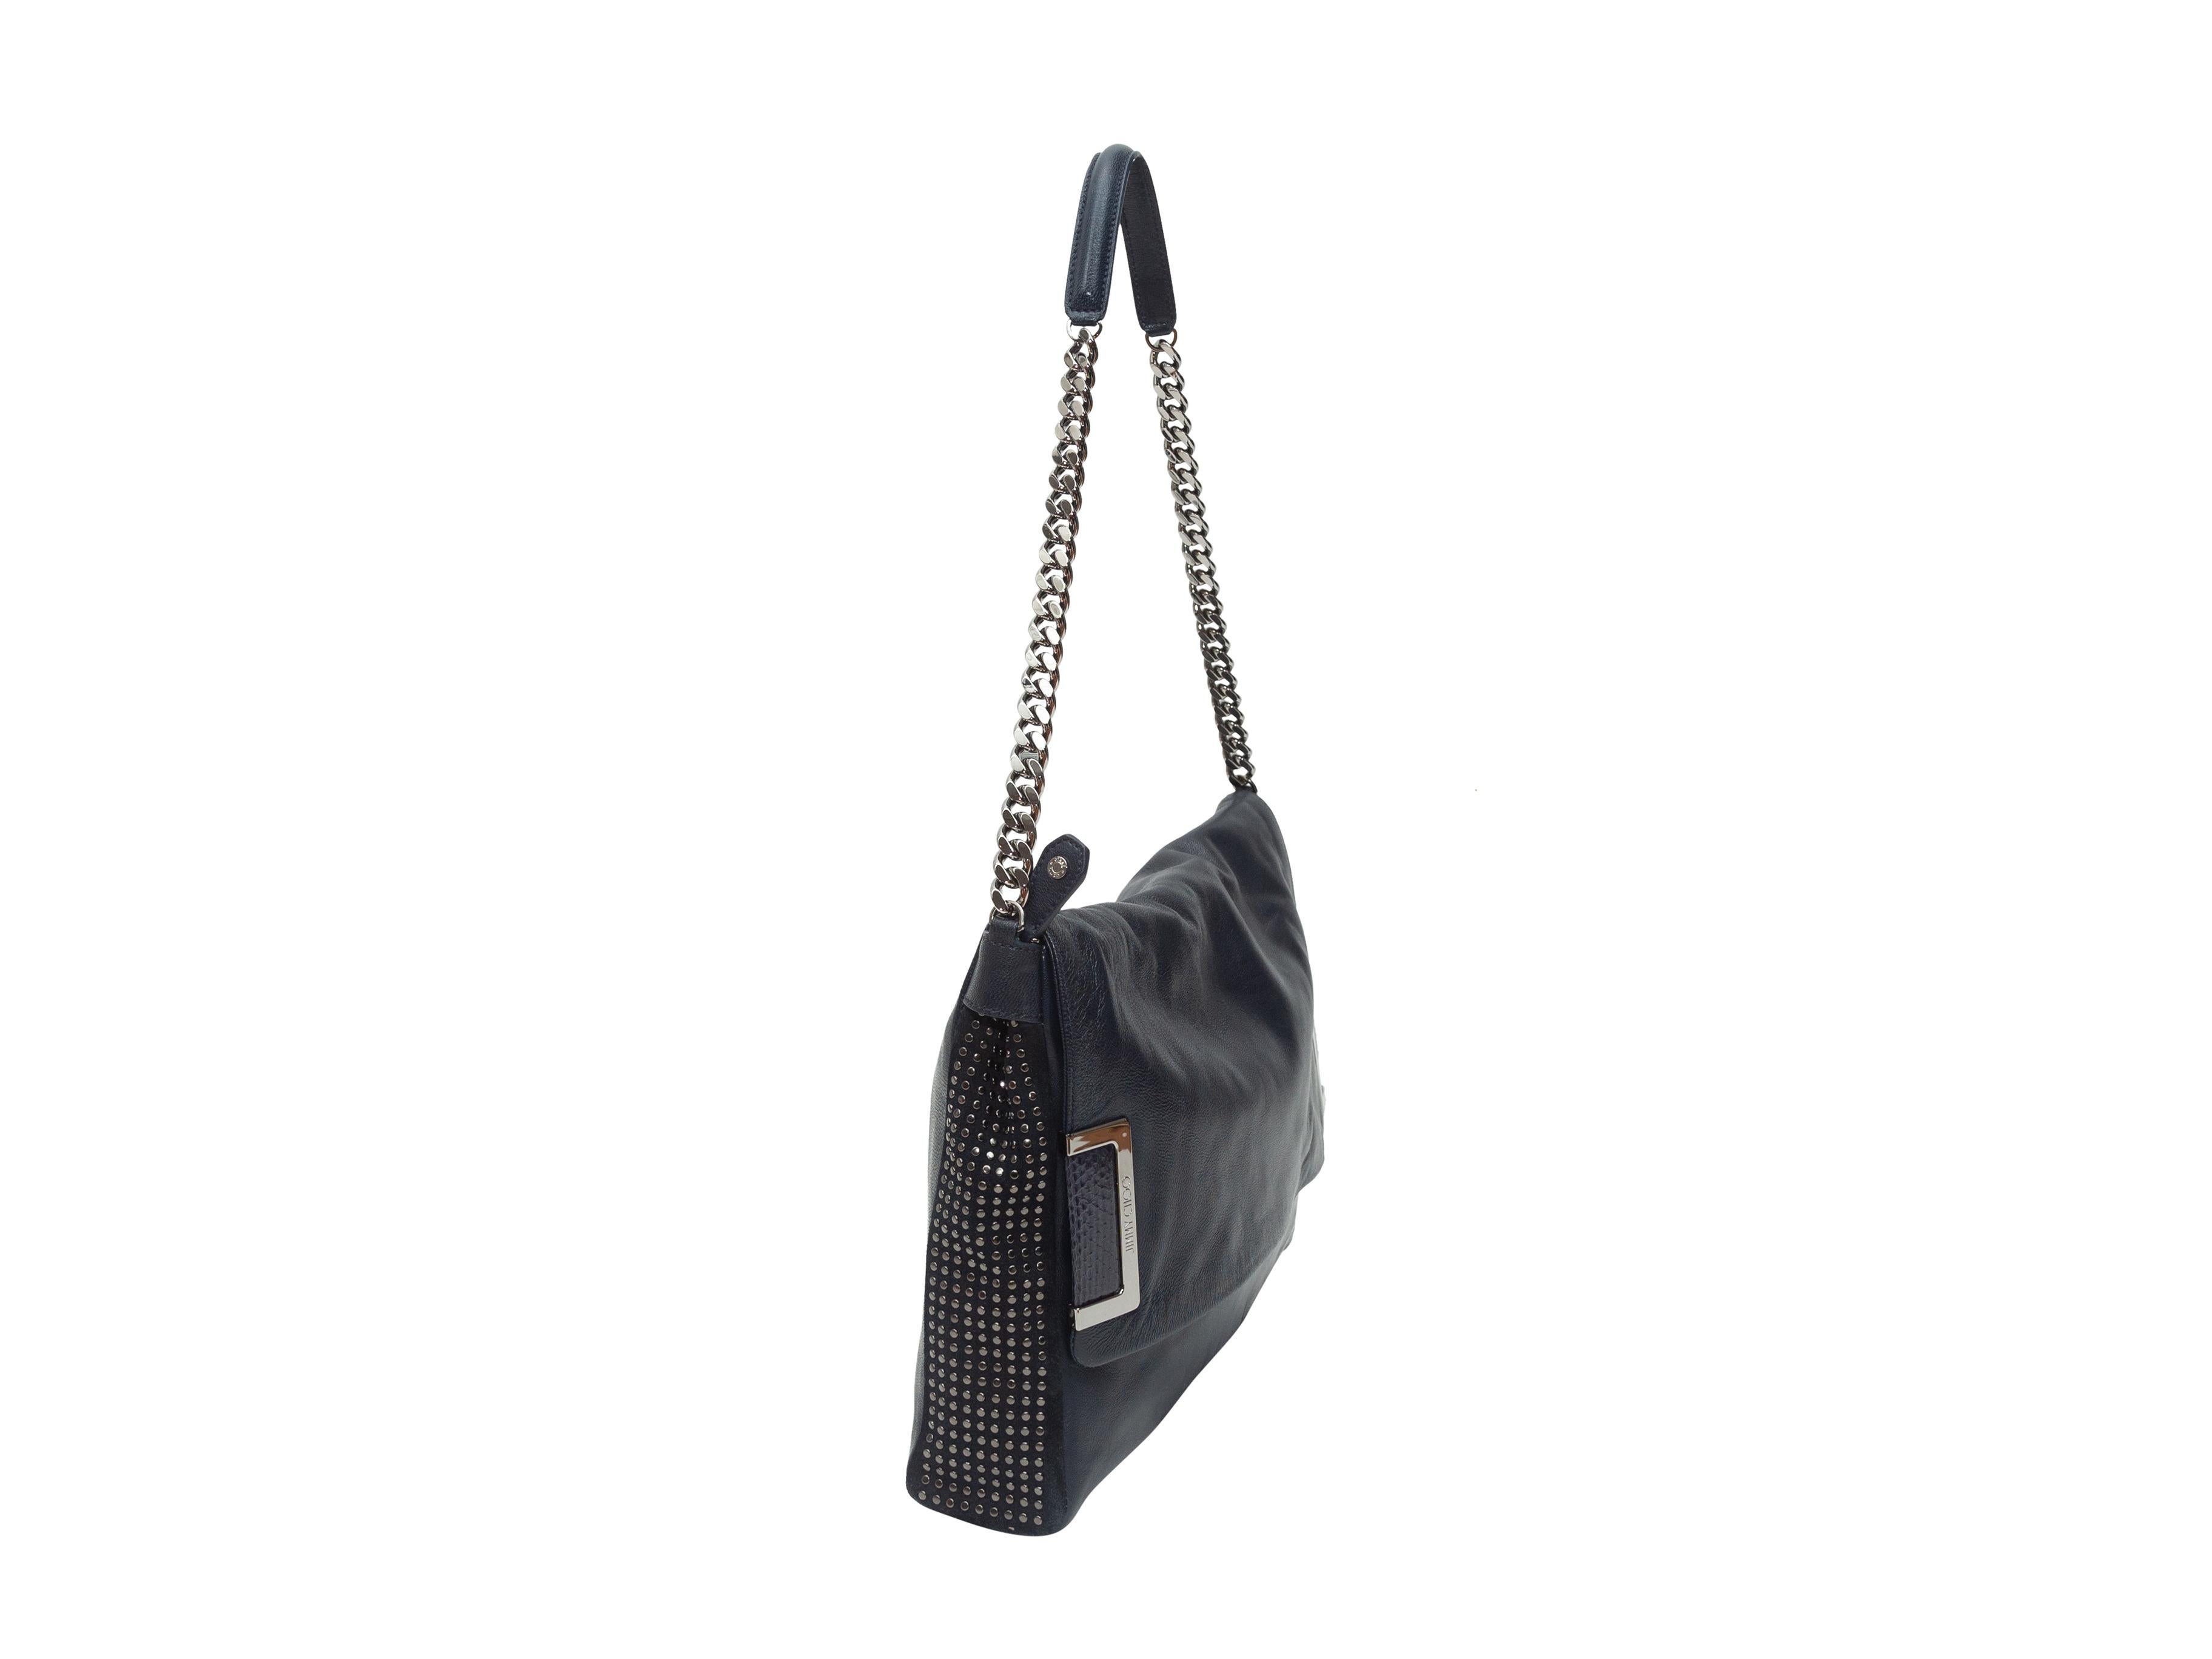 Product details: Navy leather shoulder bag by Jimmy Choo. Silver-tone hardware. Interior zip pocket. Leather and chain-link shoulder strap. Stud detailing at sides. 12.5